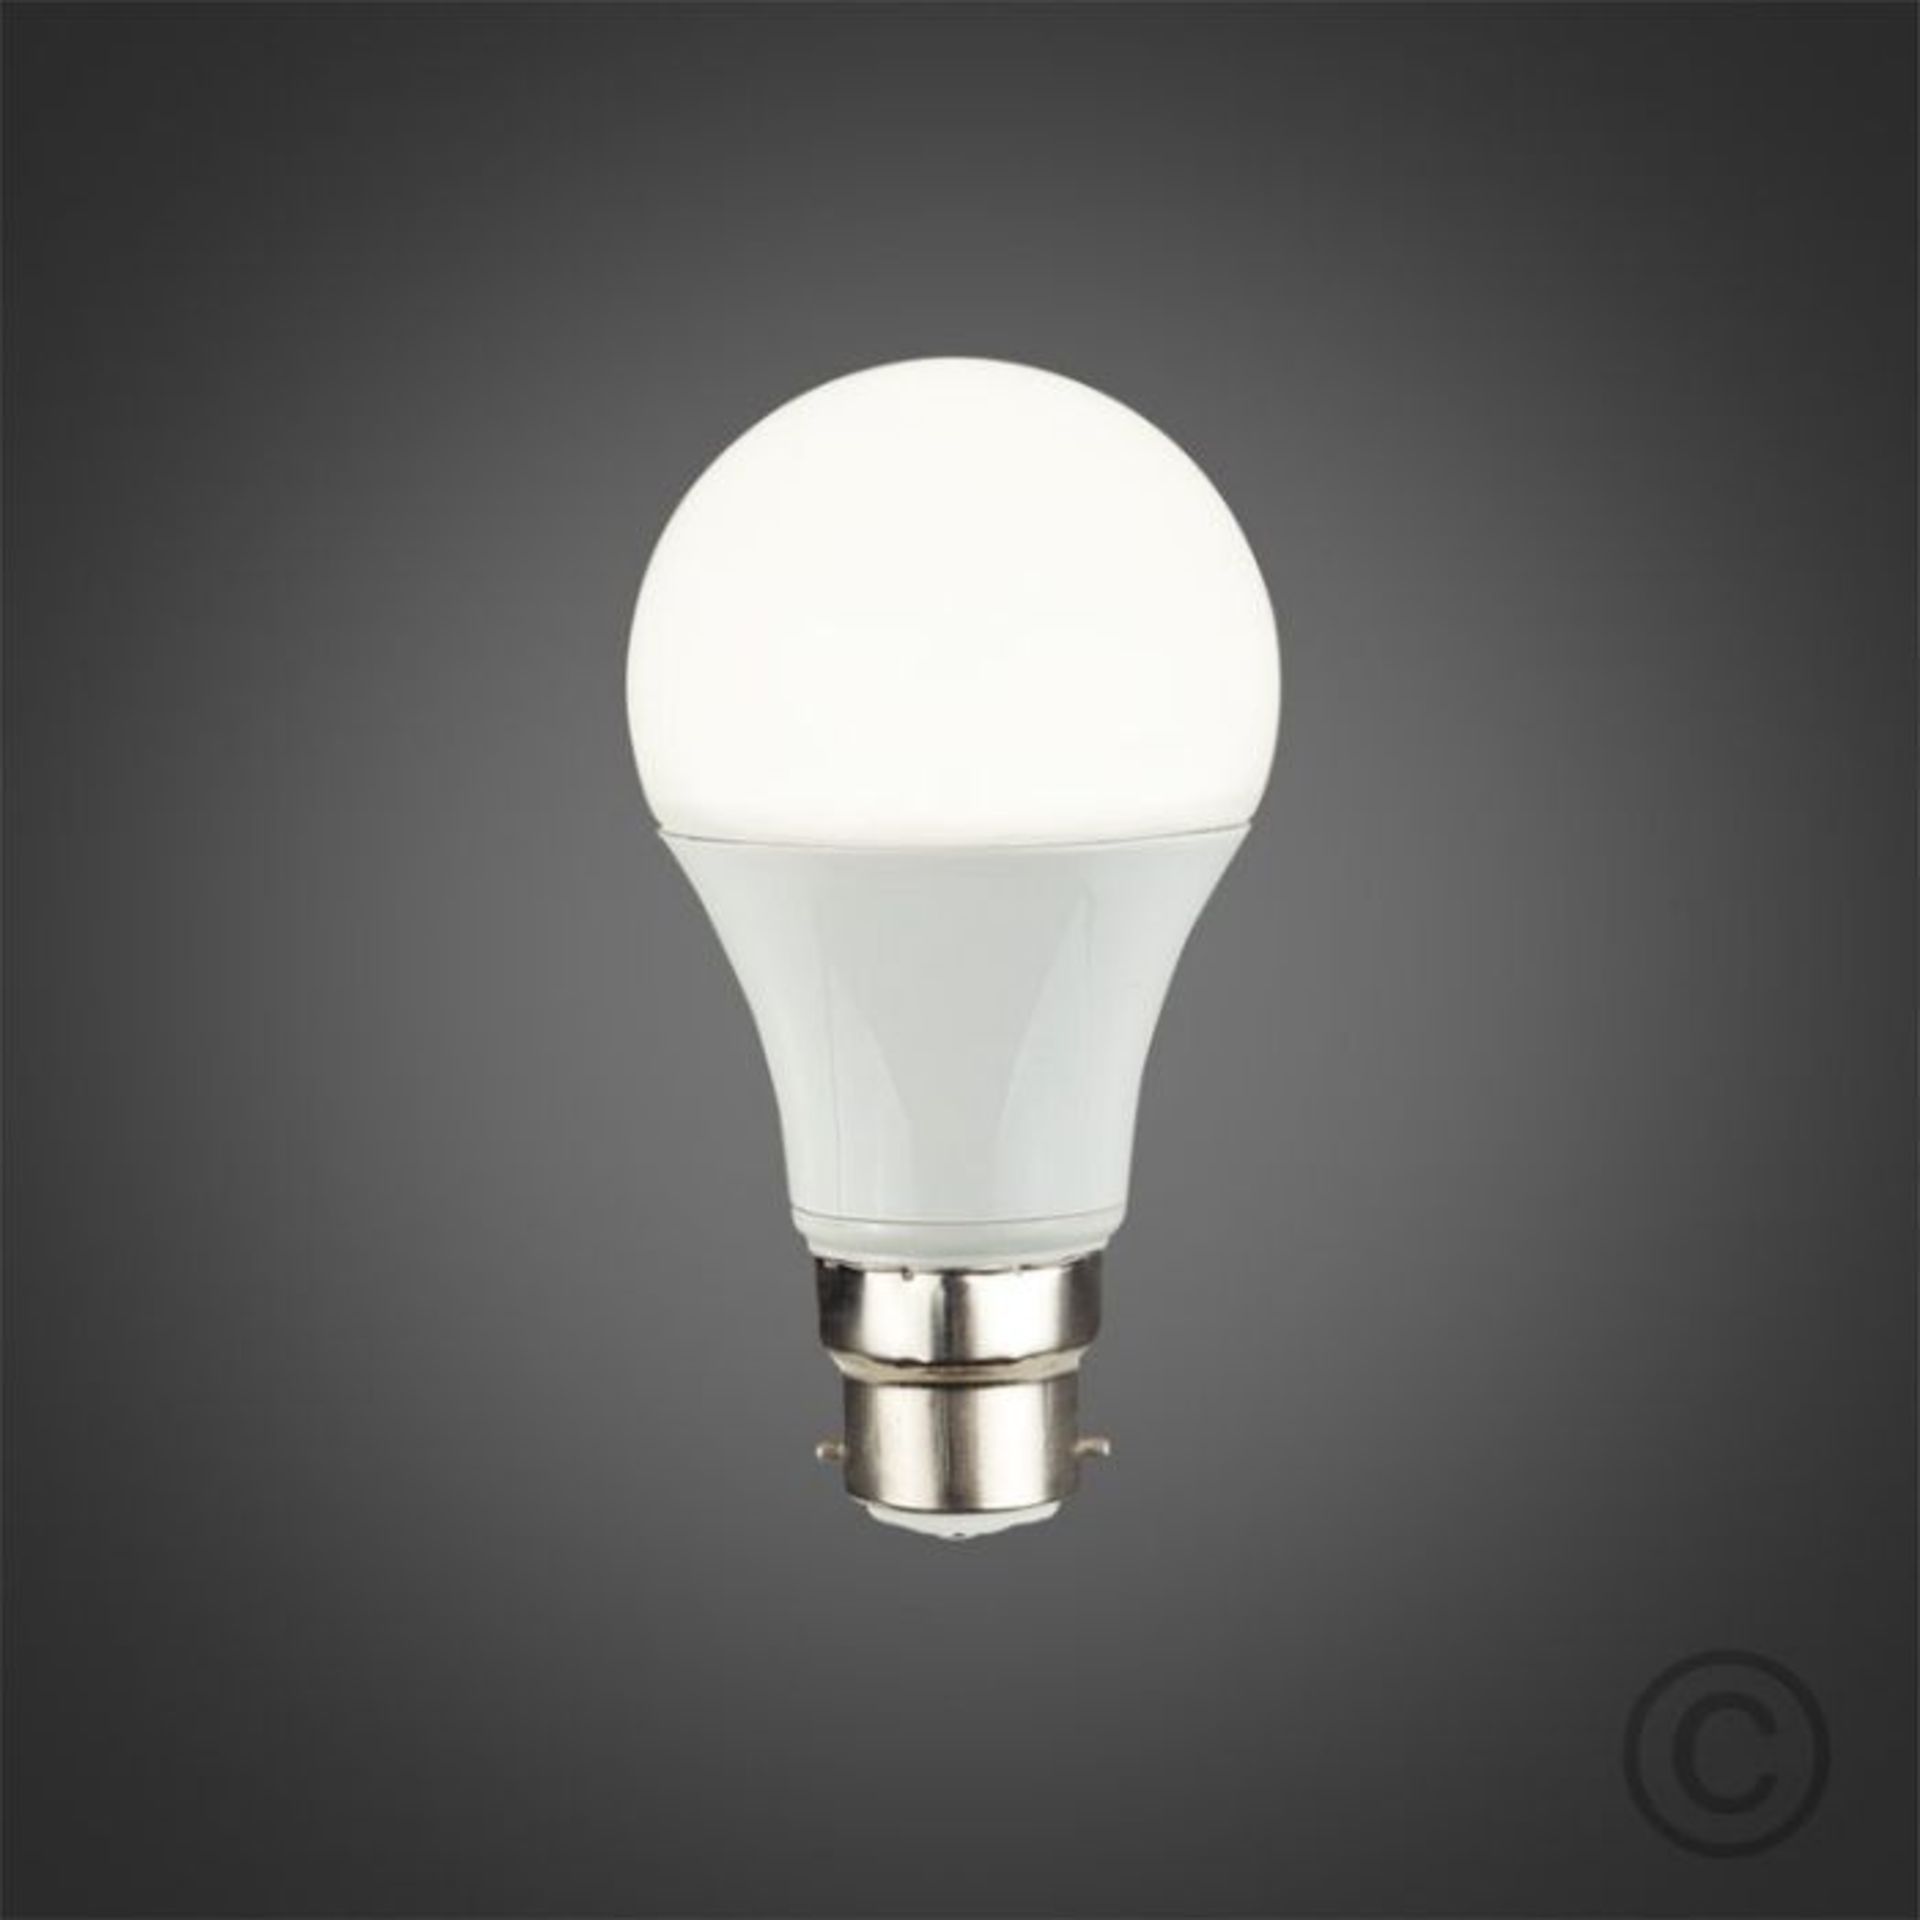 Symple Stuff, B22 LED Light Bulb - RRP £16.74 (MSUN1699 - 18372/9) 3F - Image 2 of 2